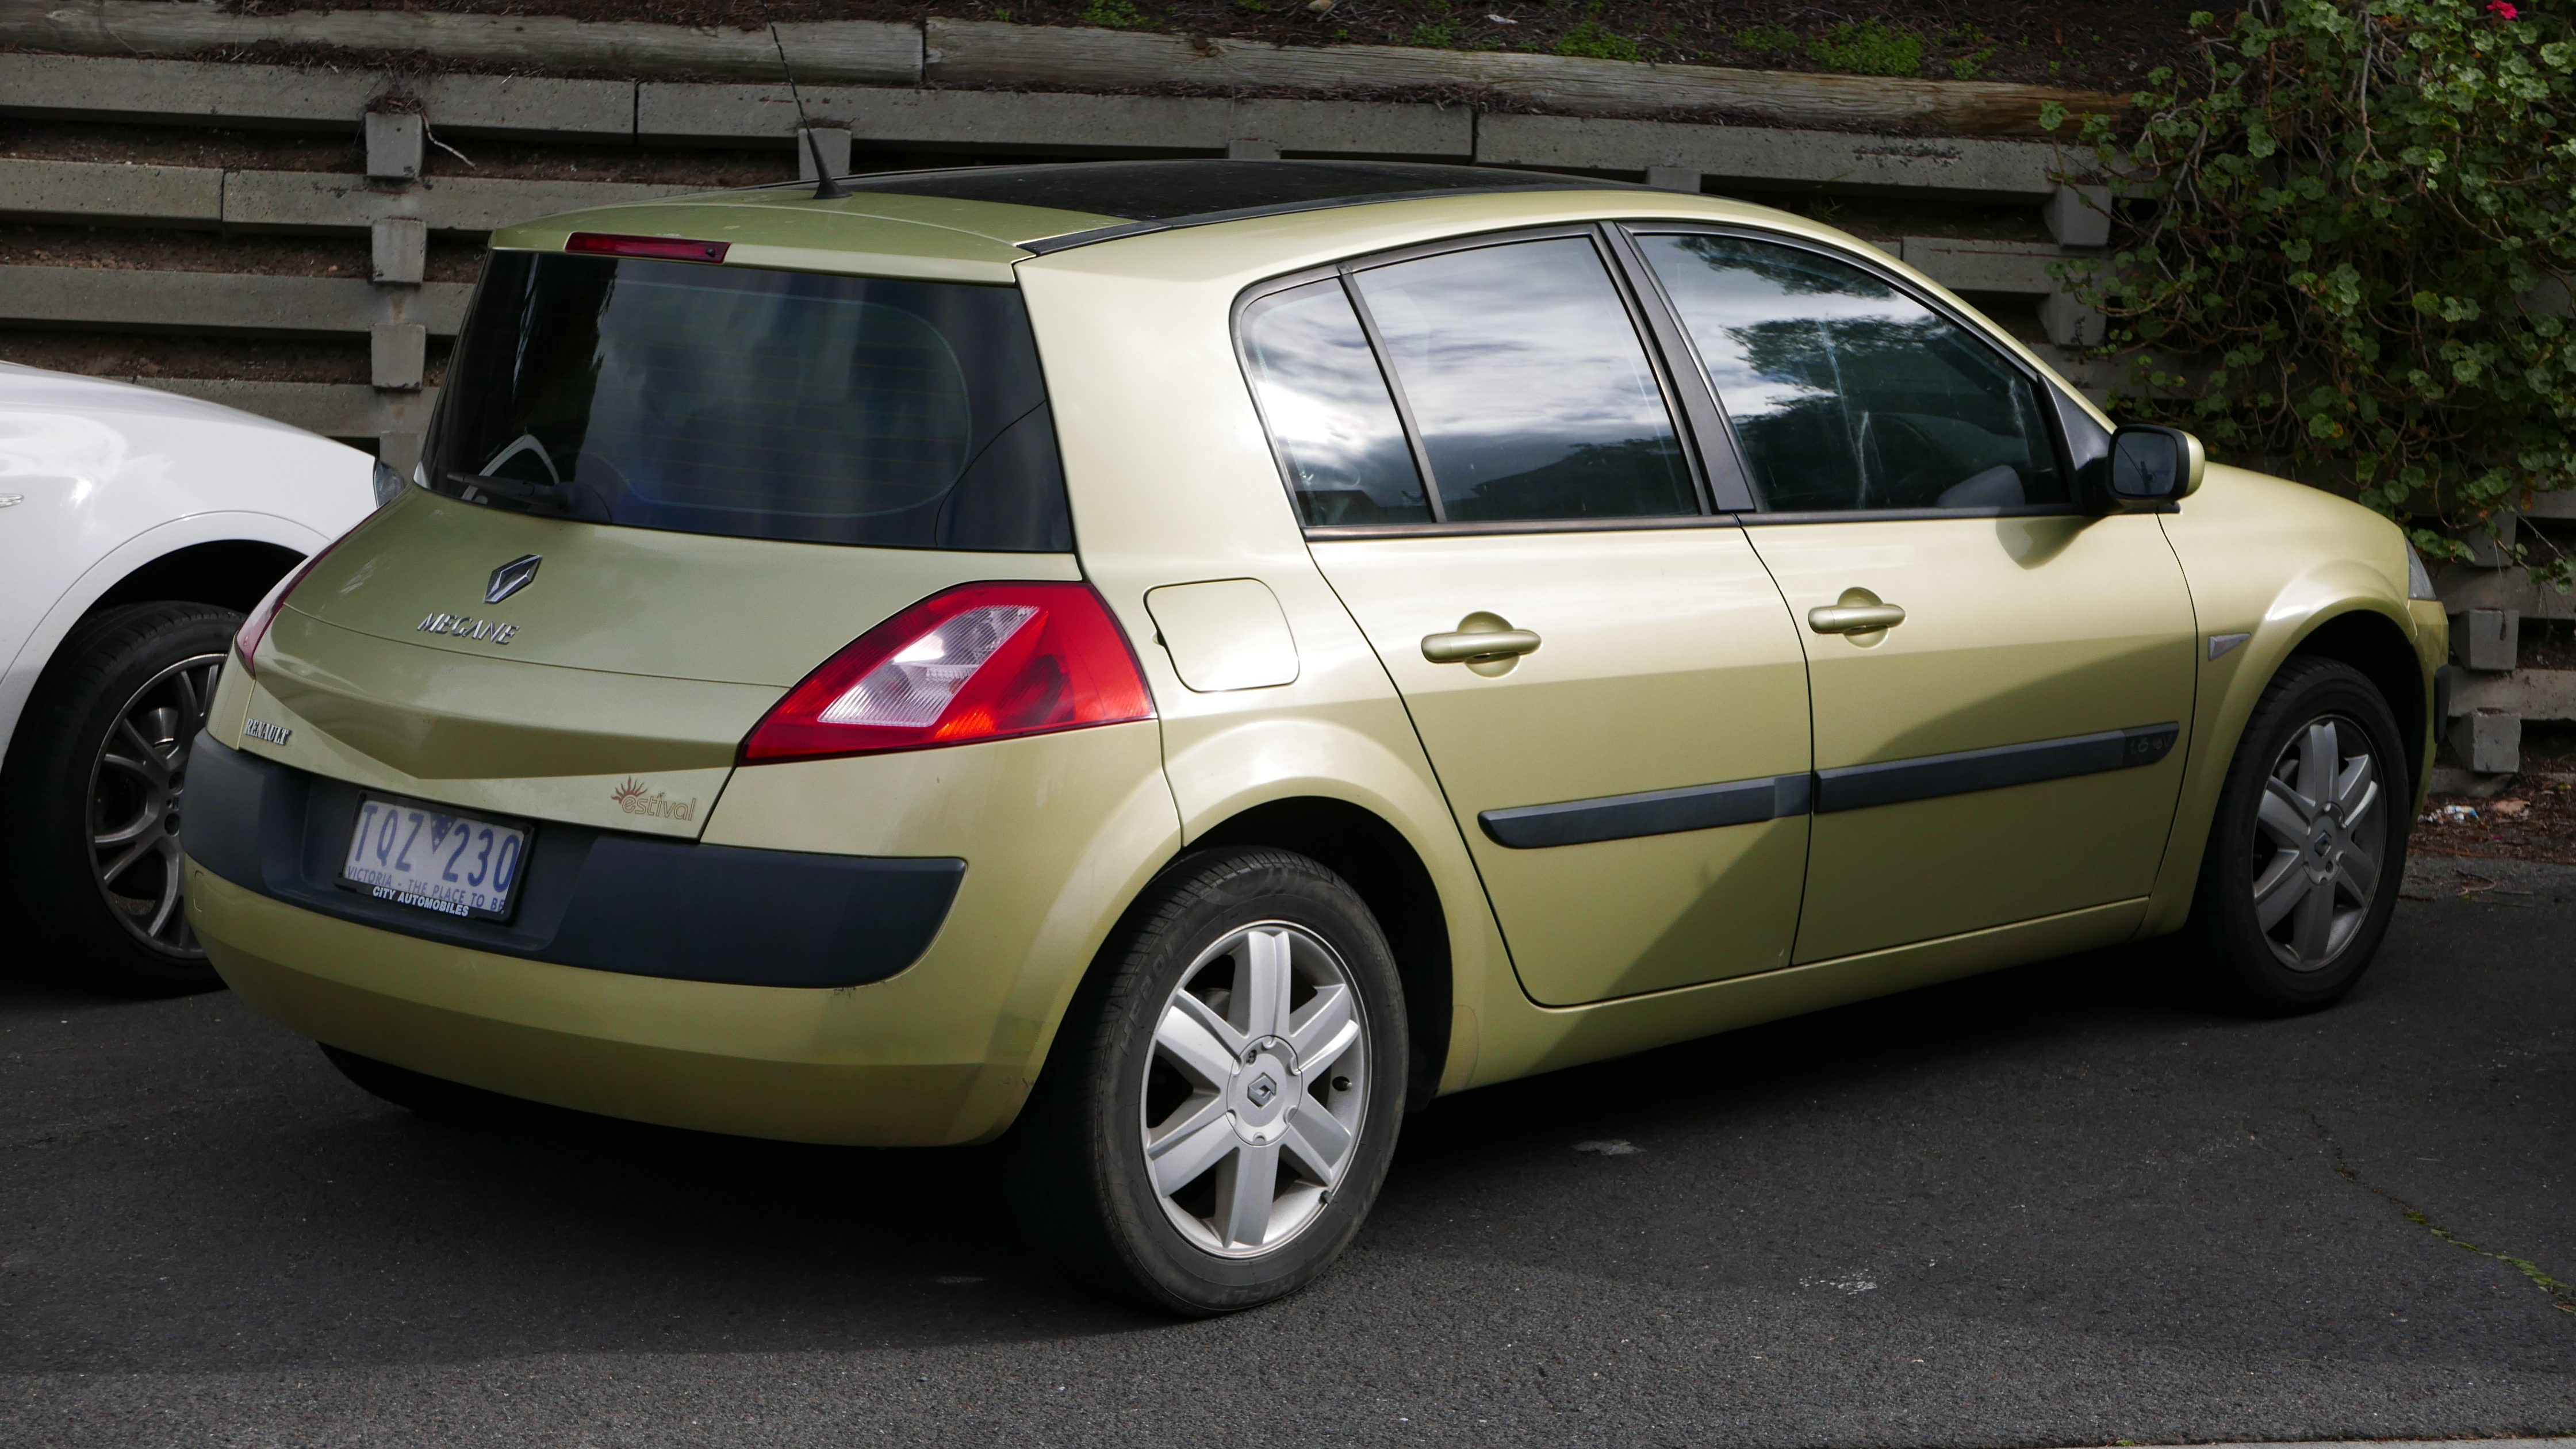 File:2005 Renault Mégane Estival hatchback - Wikimedia Commons